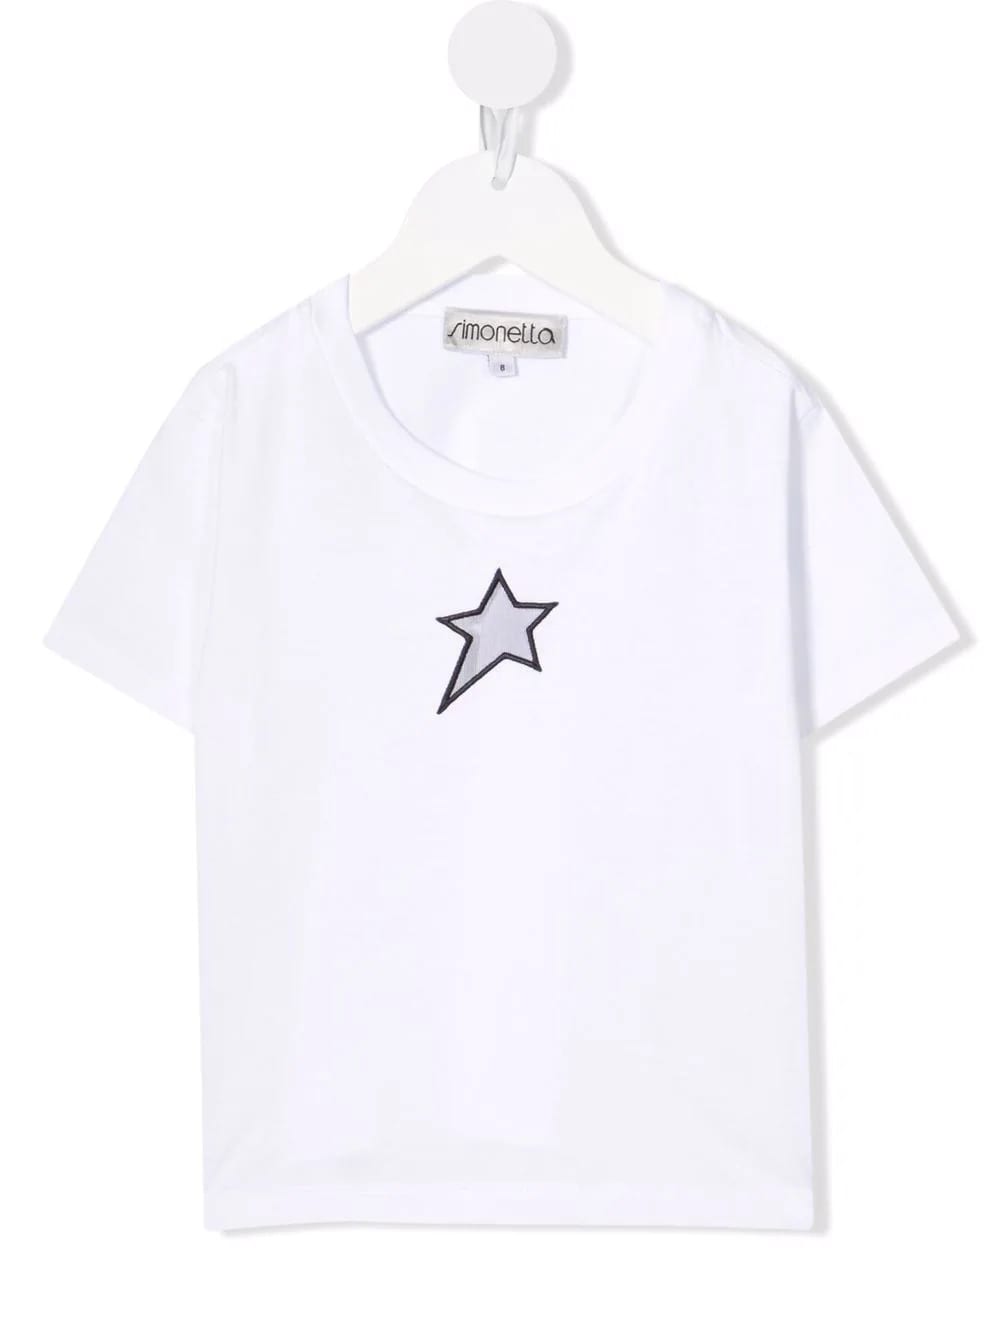 Simonetta Kids White T-shirt With Perforated Star